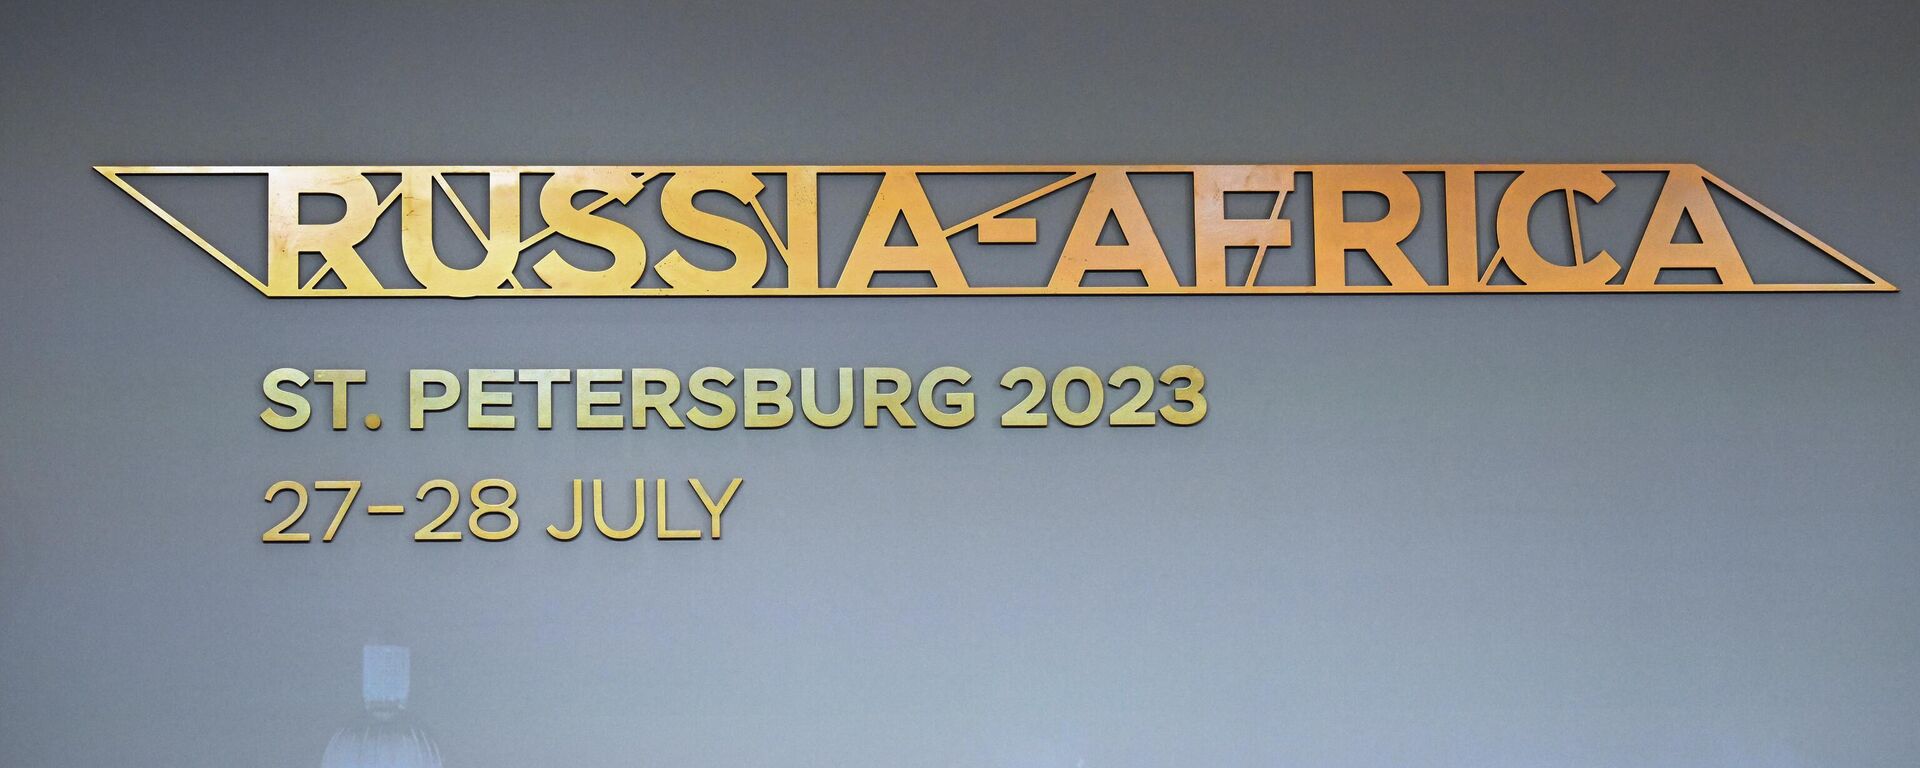 The Second Russia-Africa Summit in St. Petersburg - Sputnik Africa, 1920, 28.07.2023